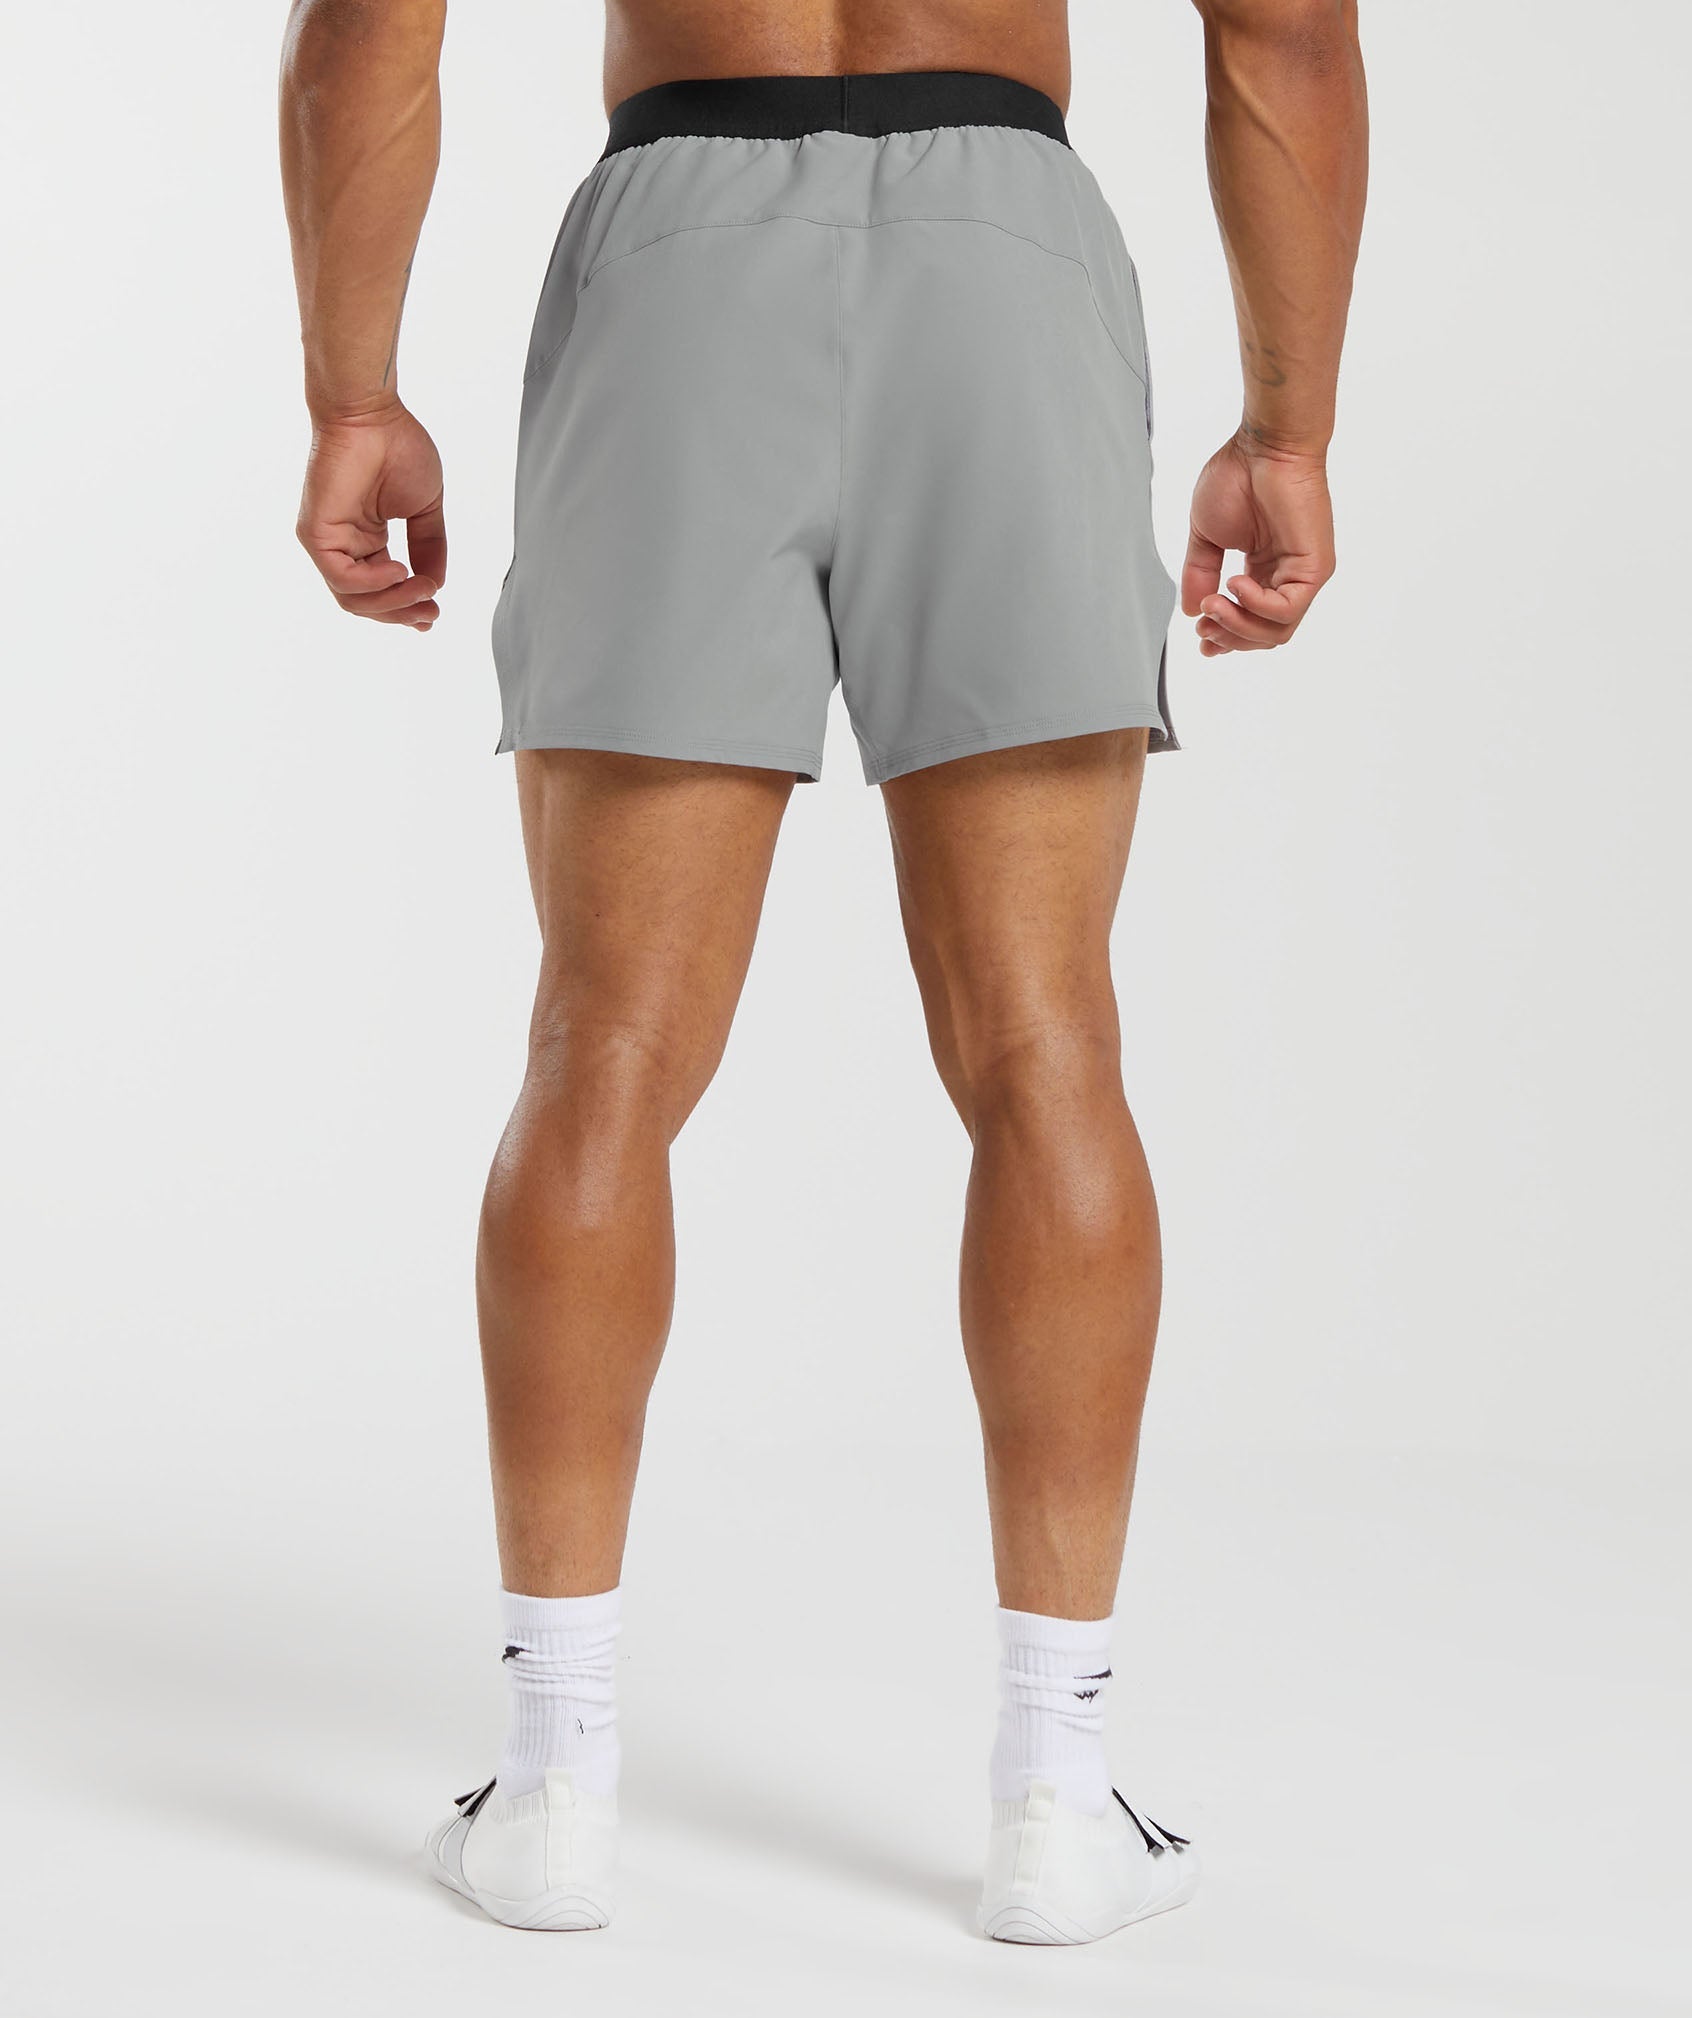 Gymshark 315 Seamless Shorts - Ink Teal/Jewel Green